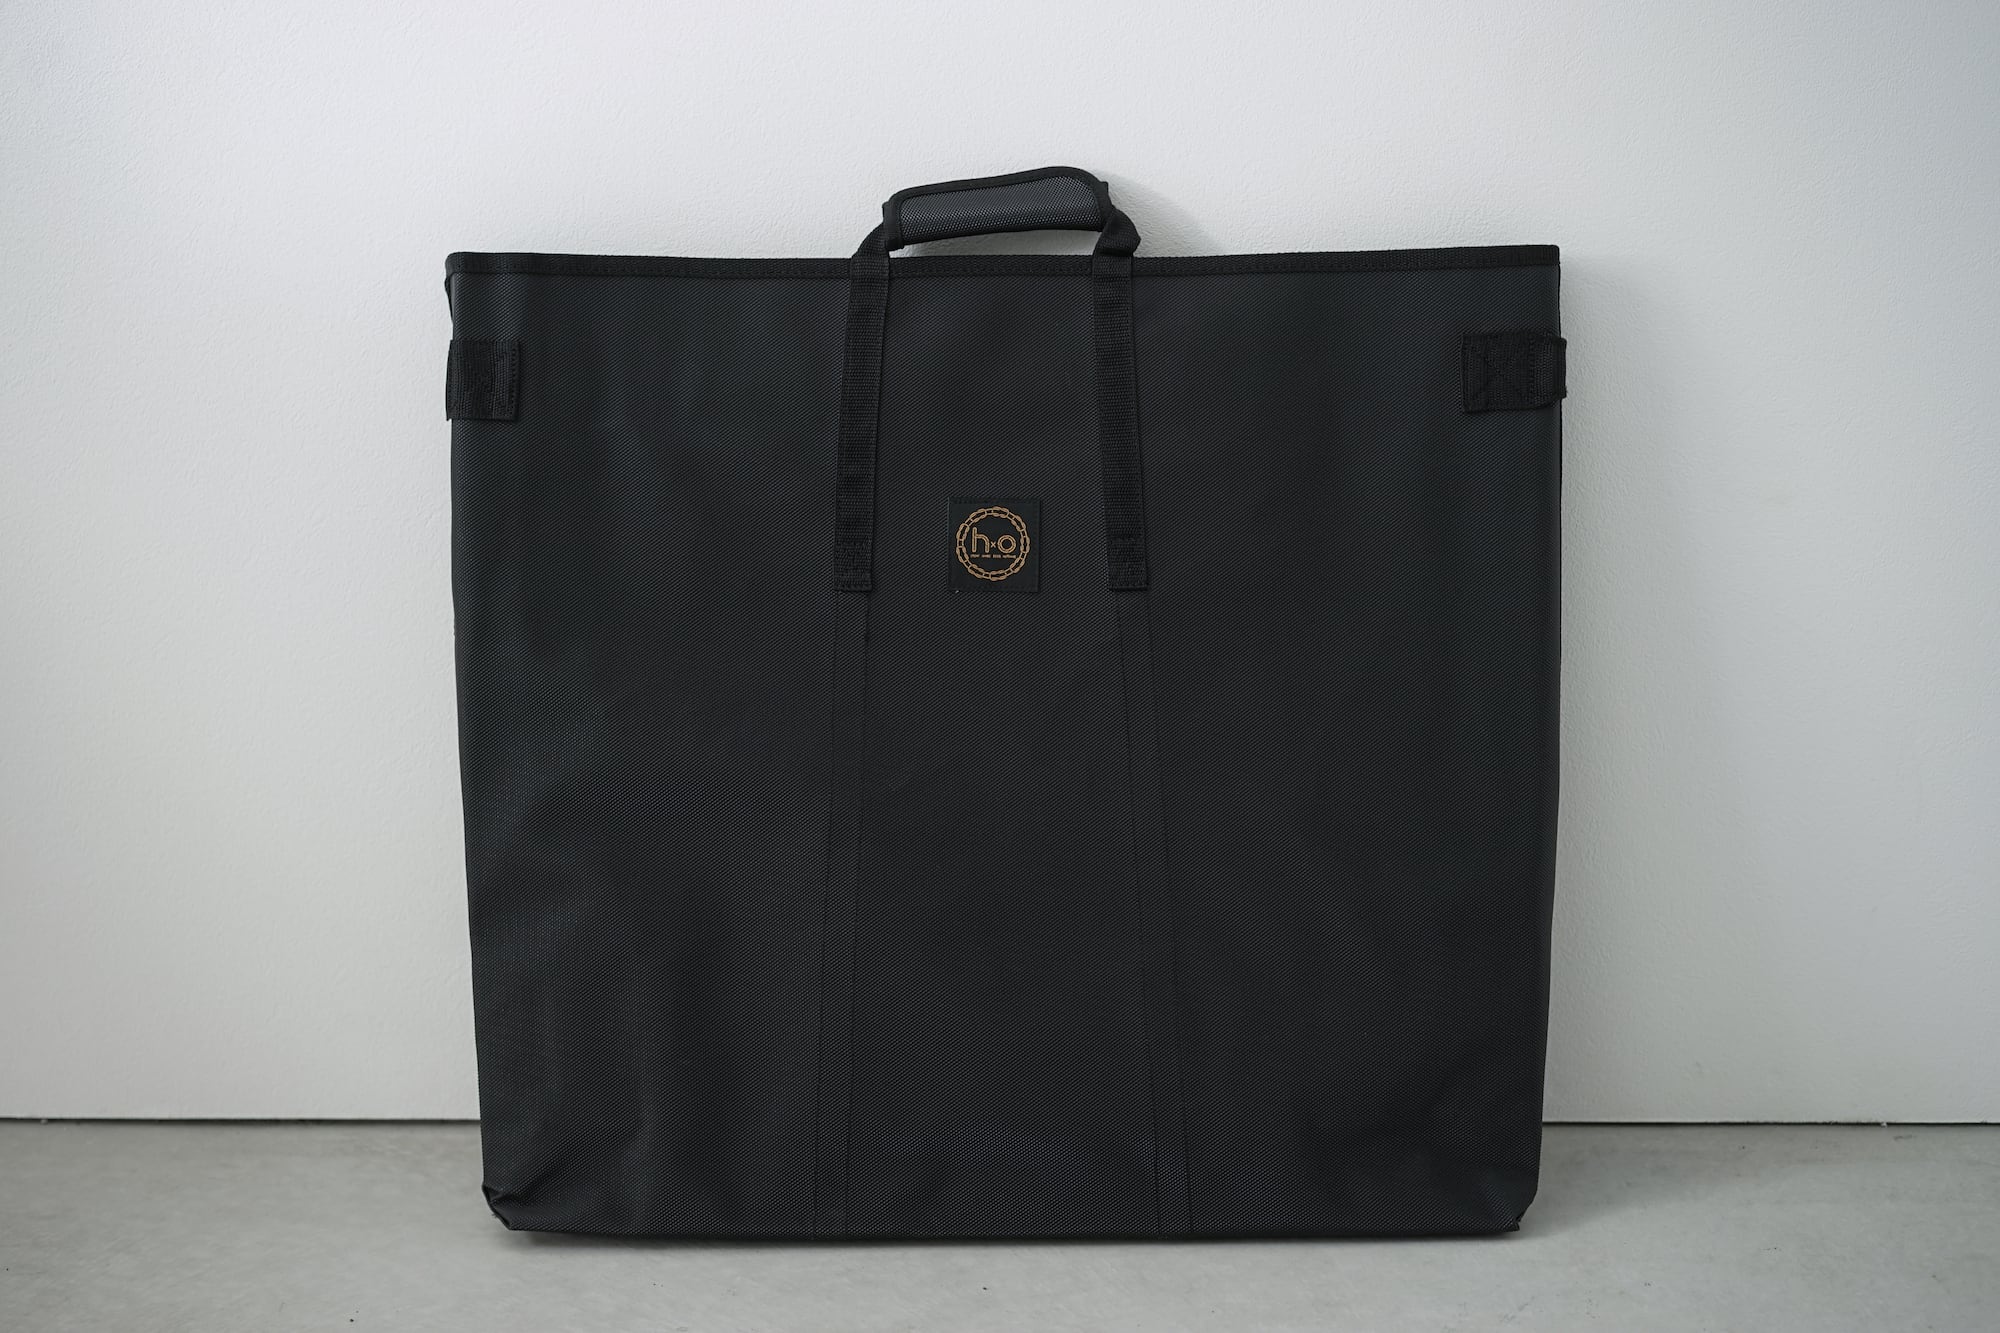 hxo Carry Bag Black | hxo design jp powered by BASE